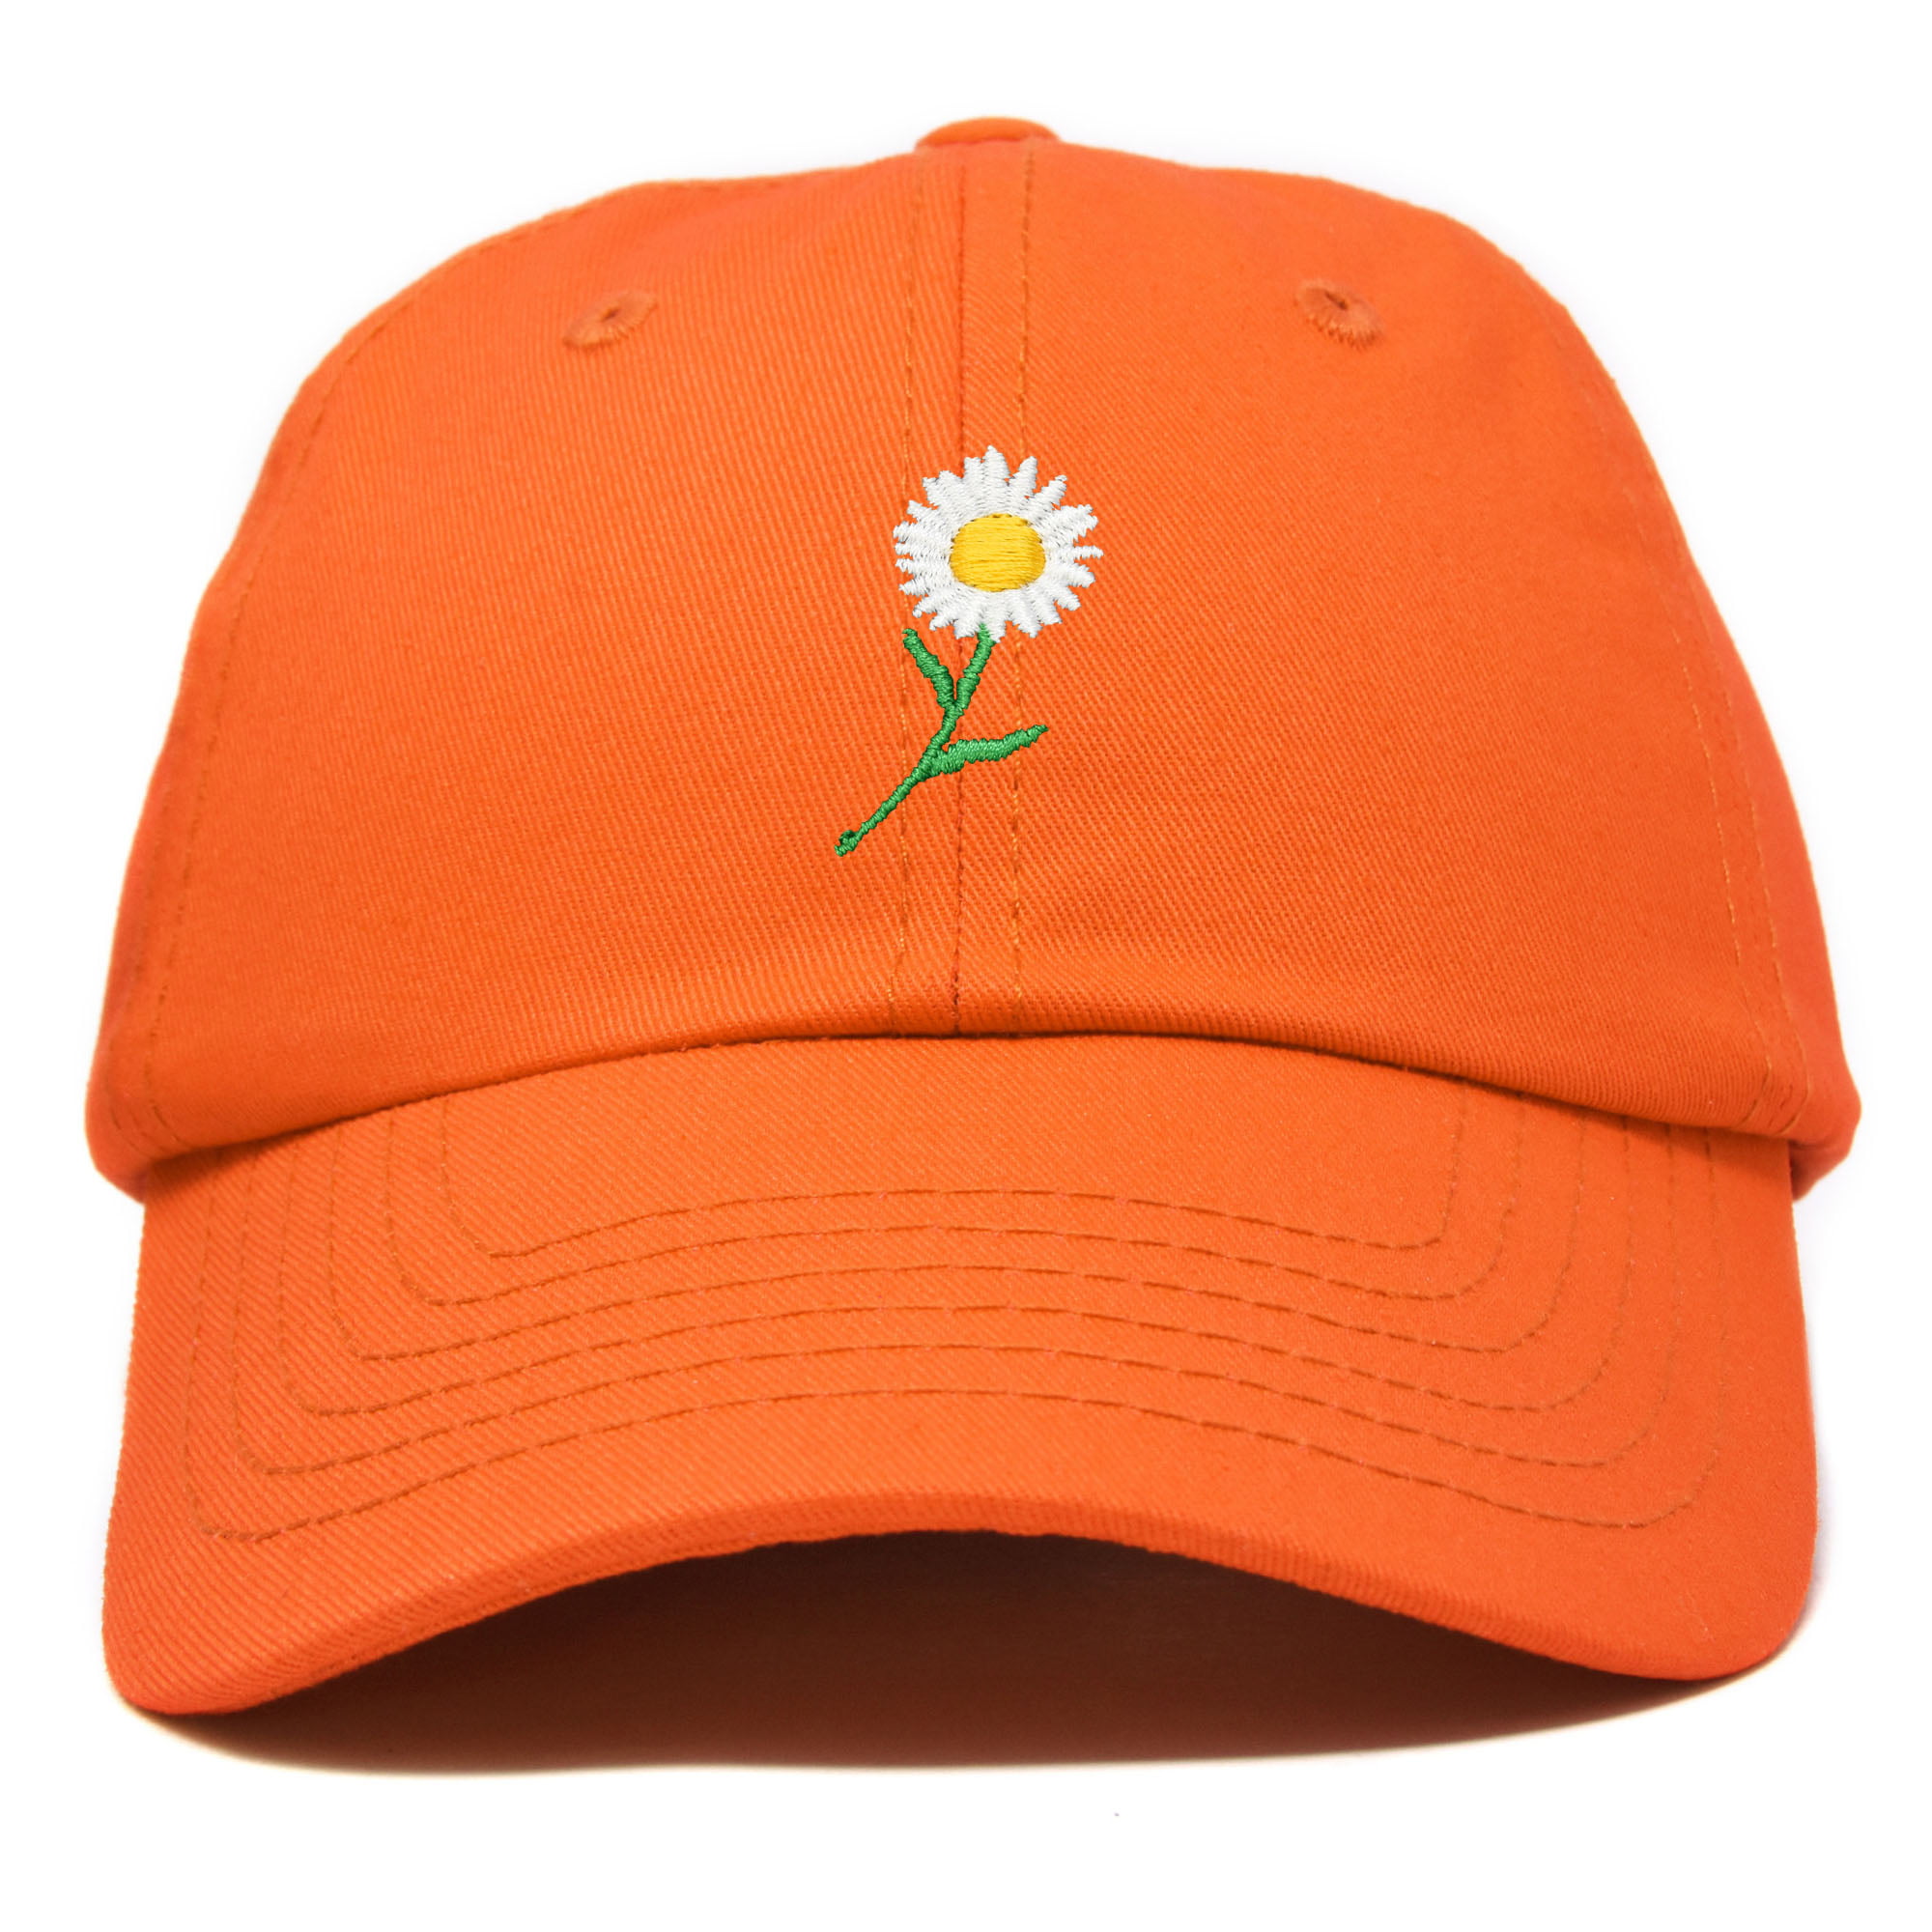 DALIX Daisy Flower Hat Womens Floral Baseball Cap in Orange - Walmart.com